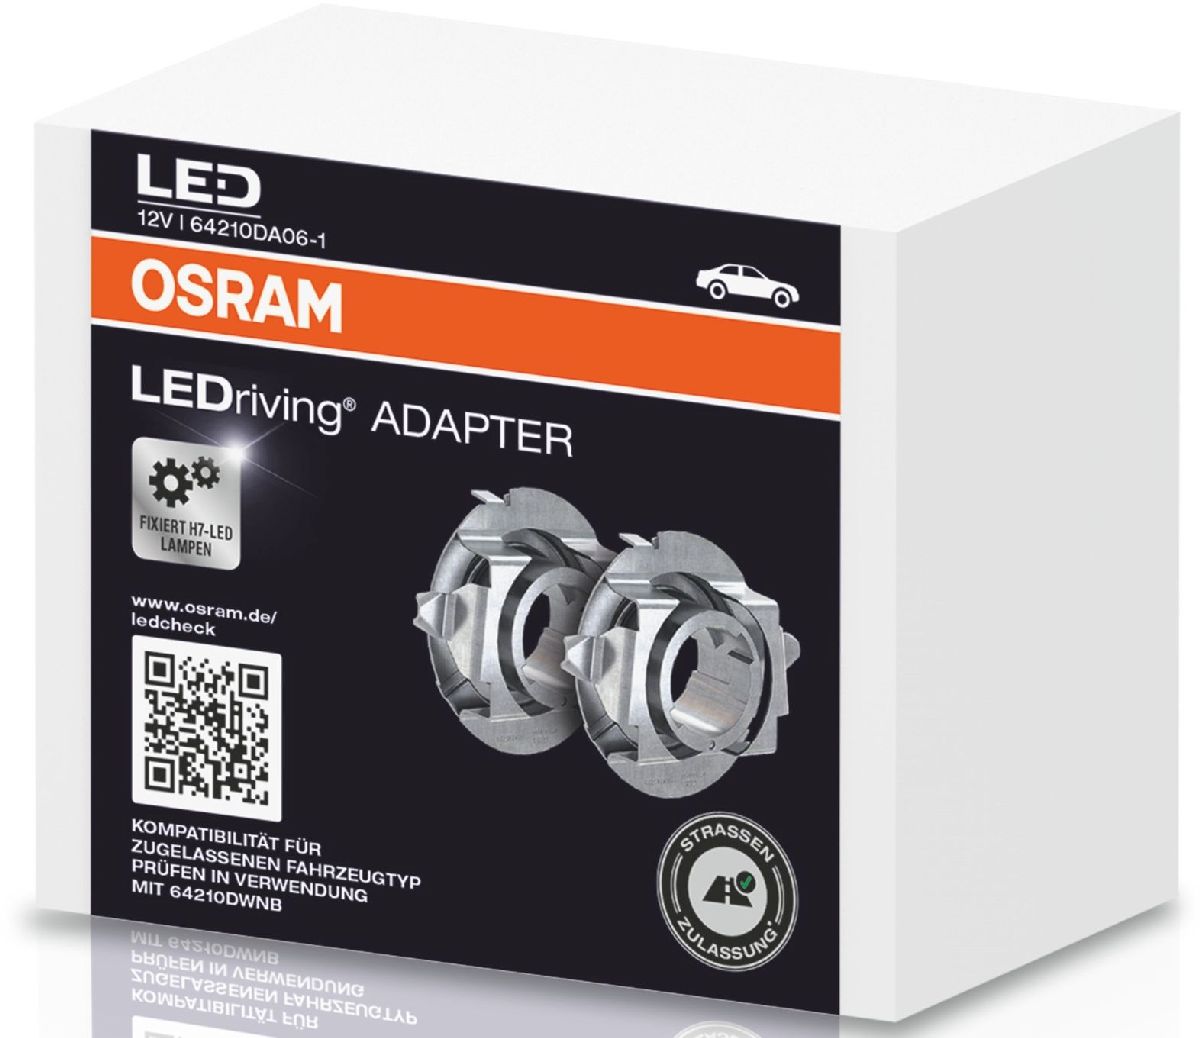 LEDriving Adapter 6-1